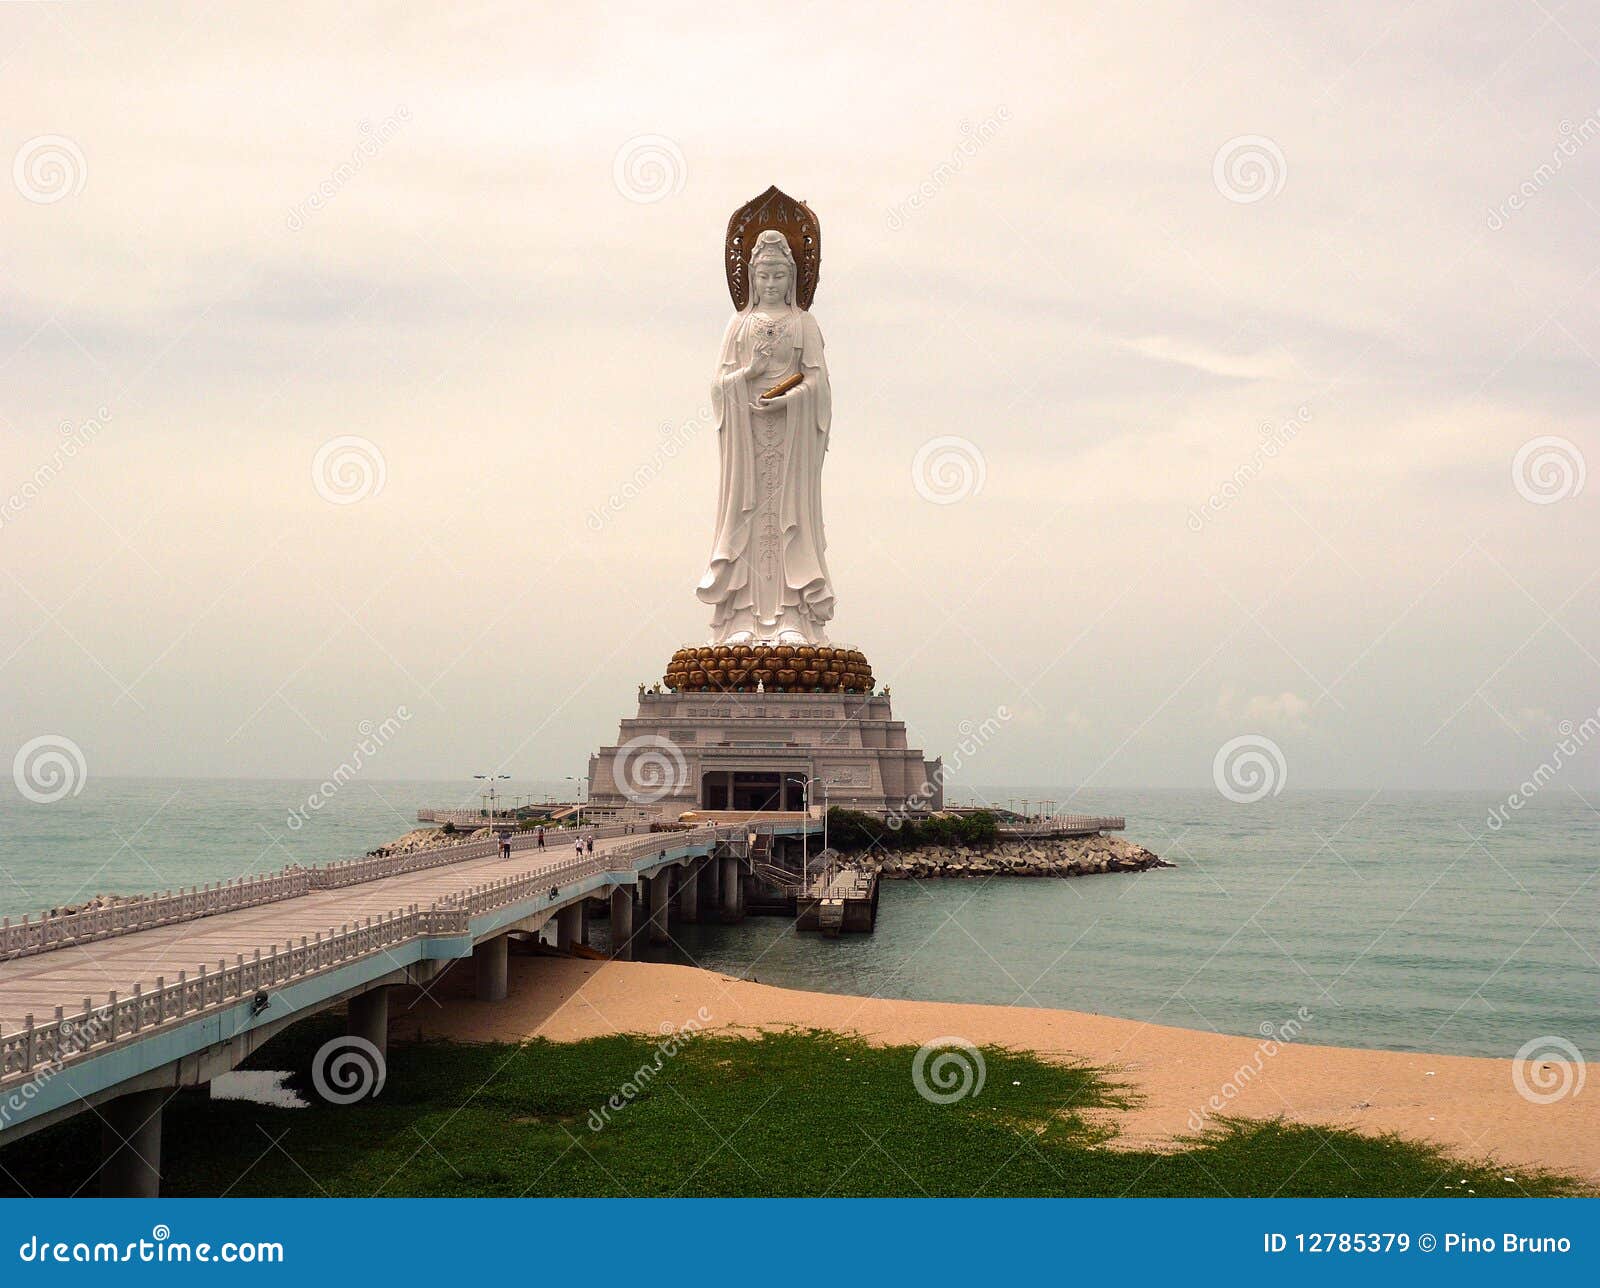 the buddha statue in the chinese hainan island